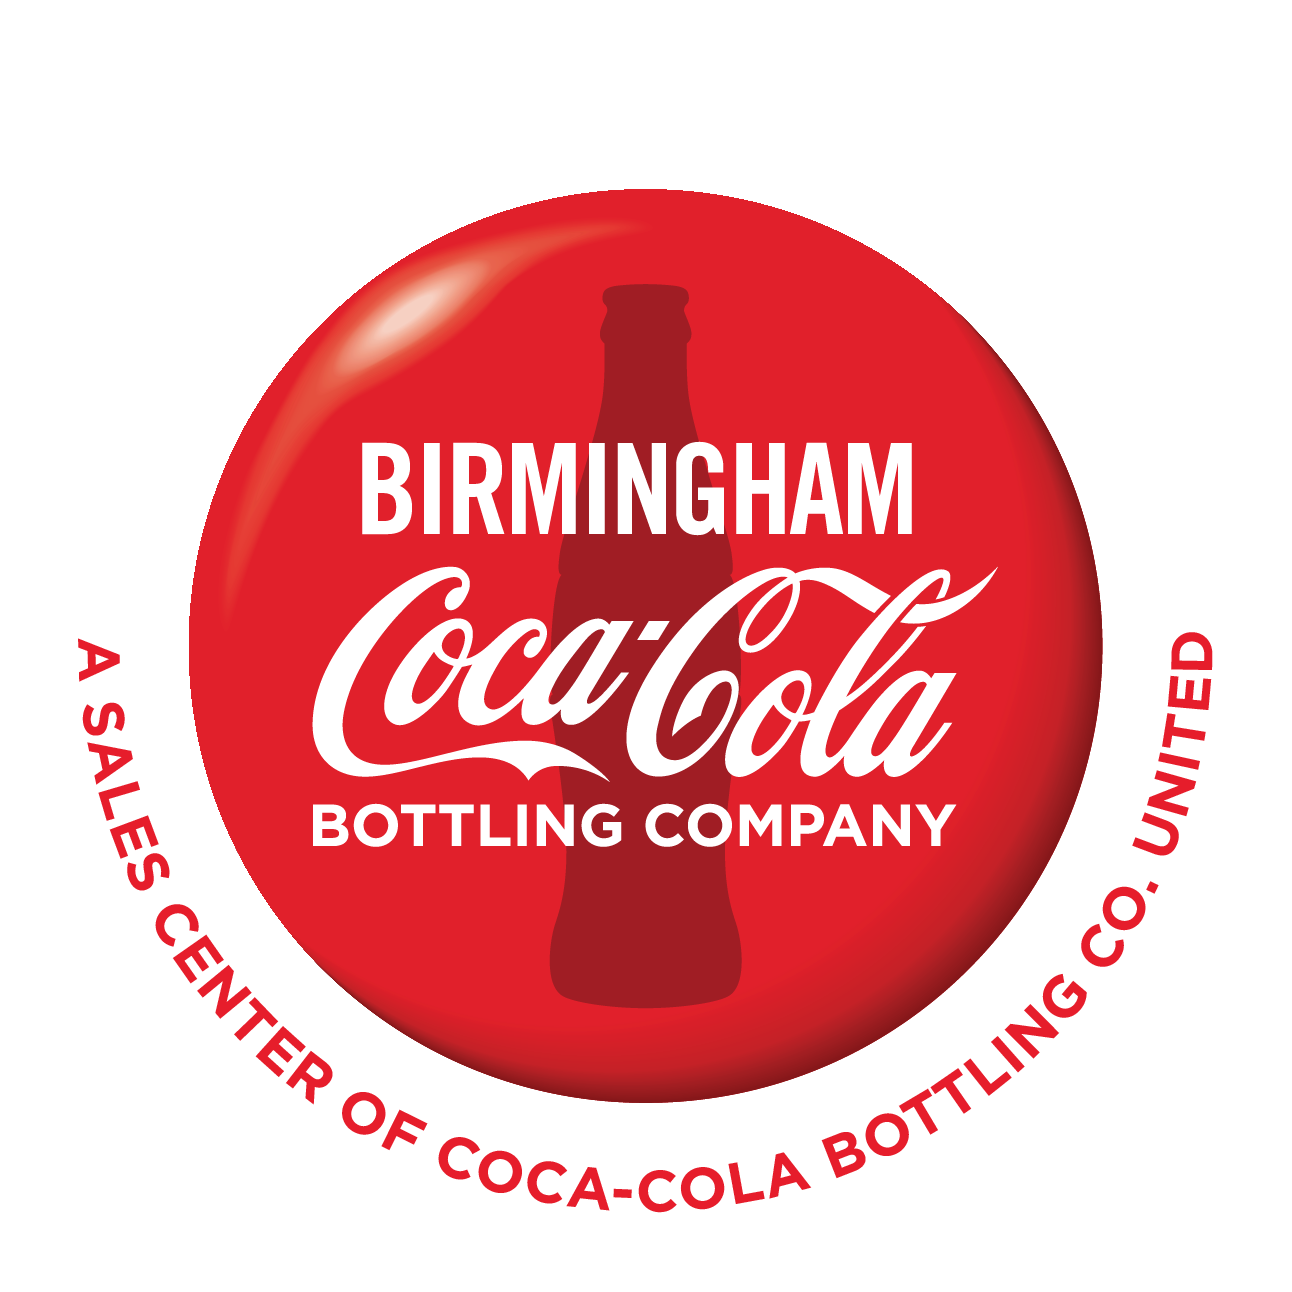 Birmingham Coca-Cola Bottling Company